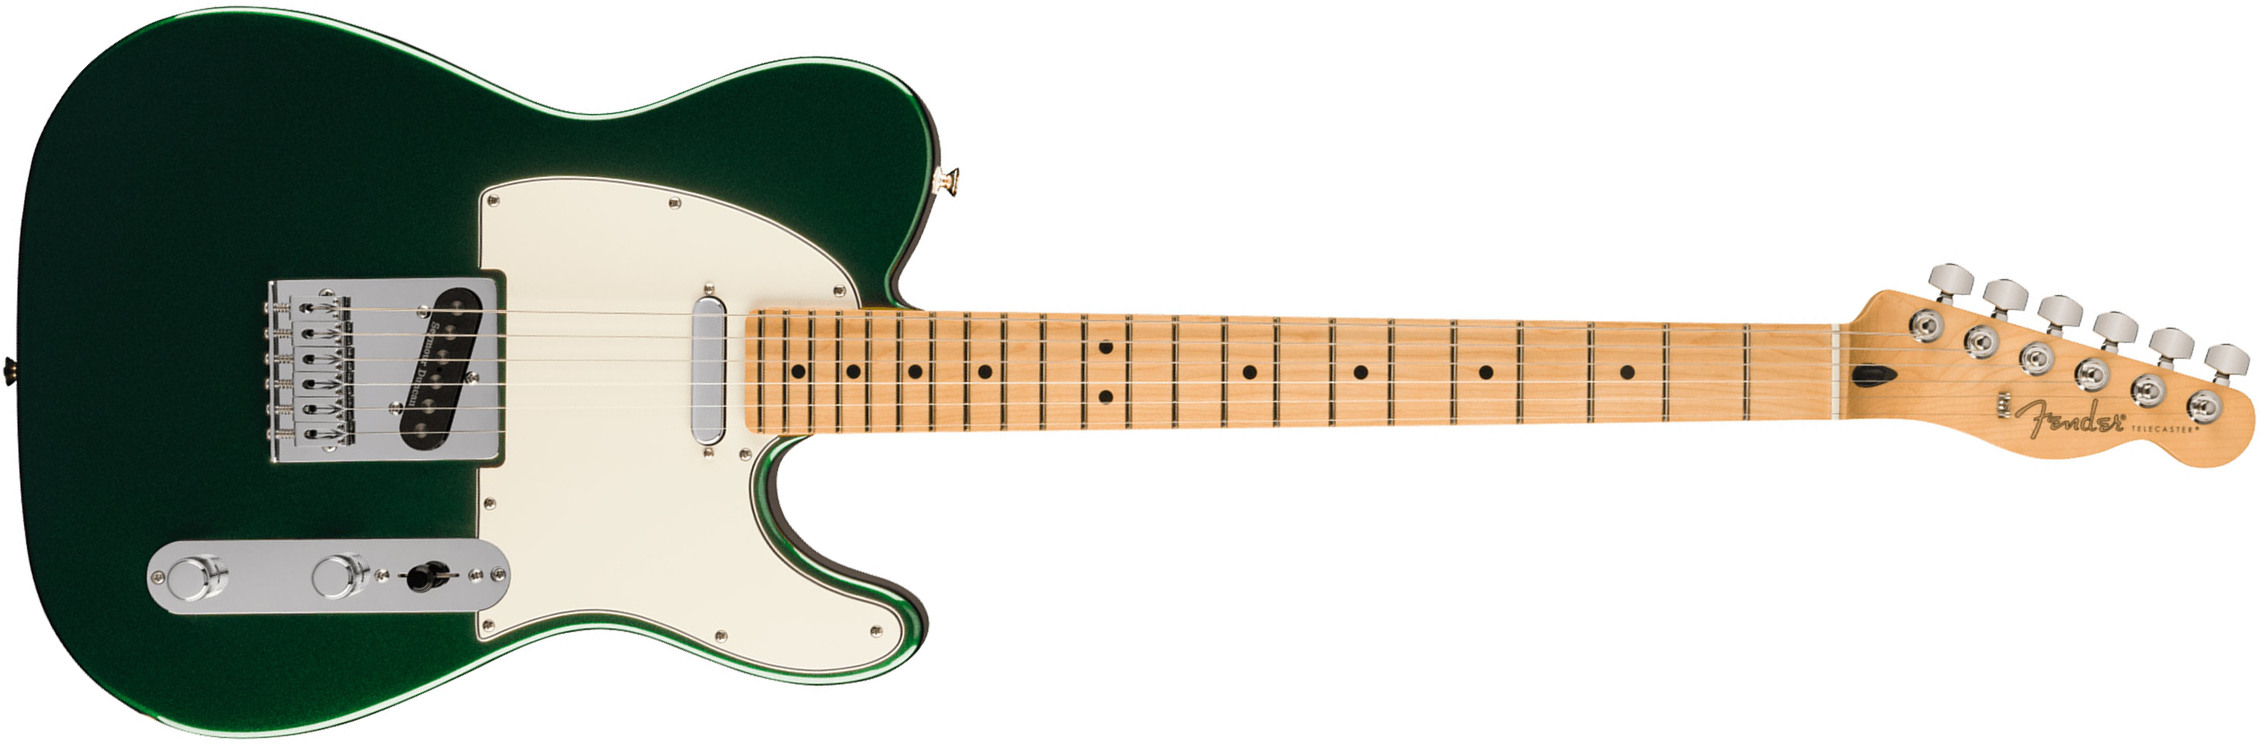 Fender Tele Player Ltd Mex 2s Seymour Duncan Mn - British Racing Green - Televorm elektrische gitaar - Main picture